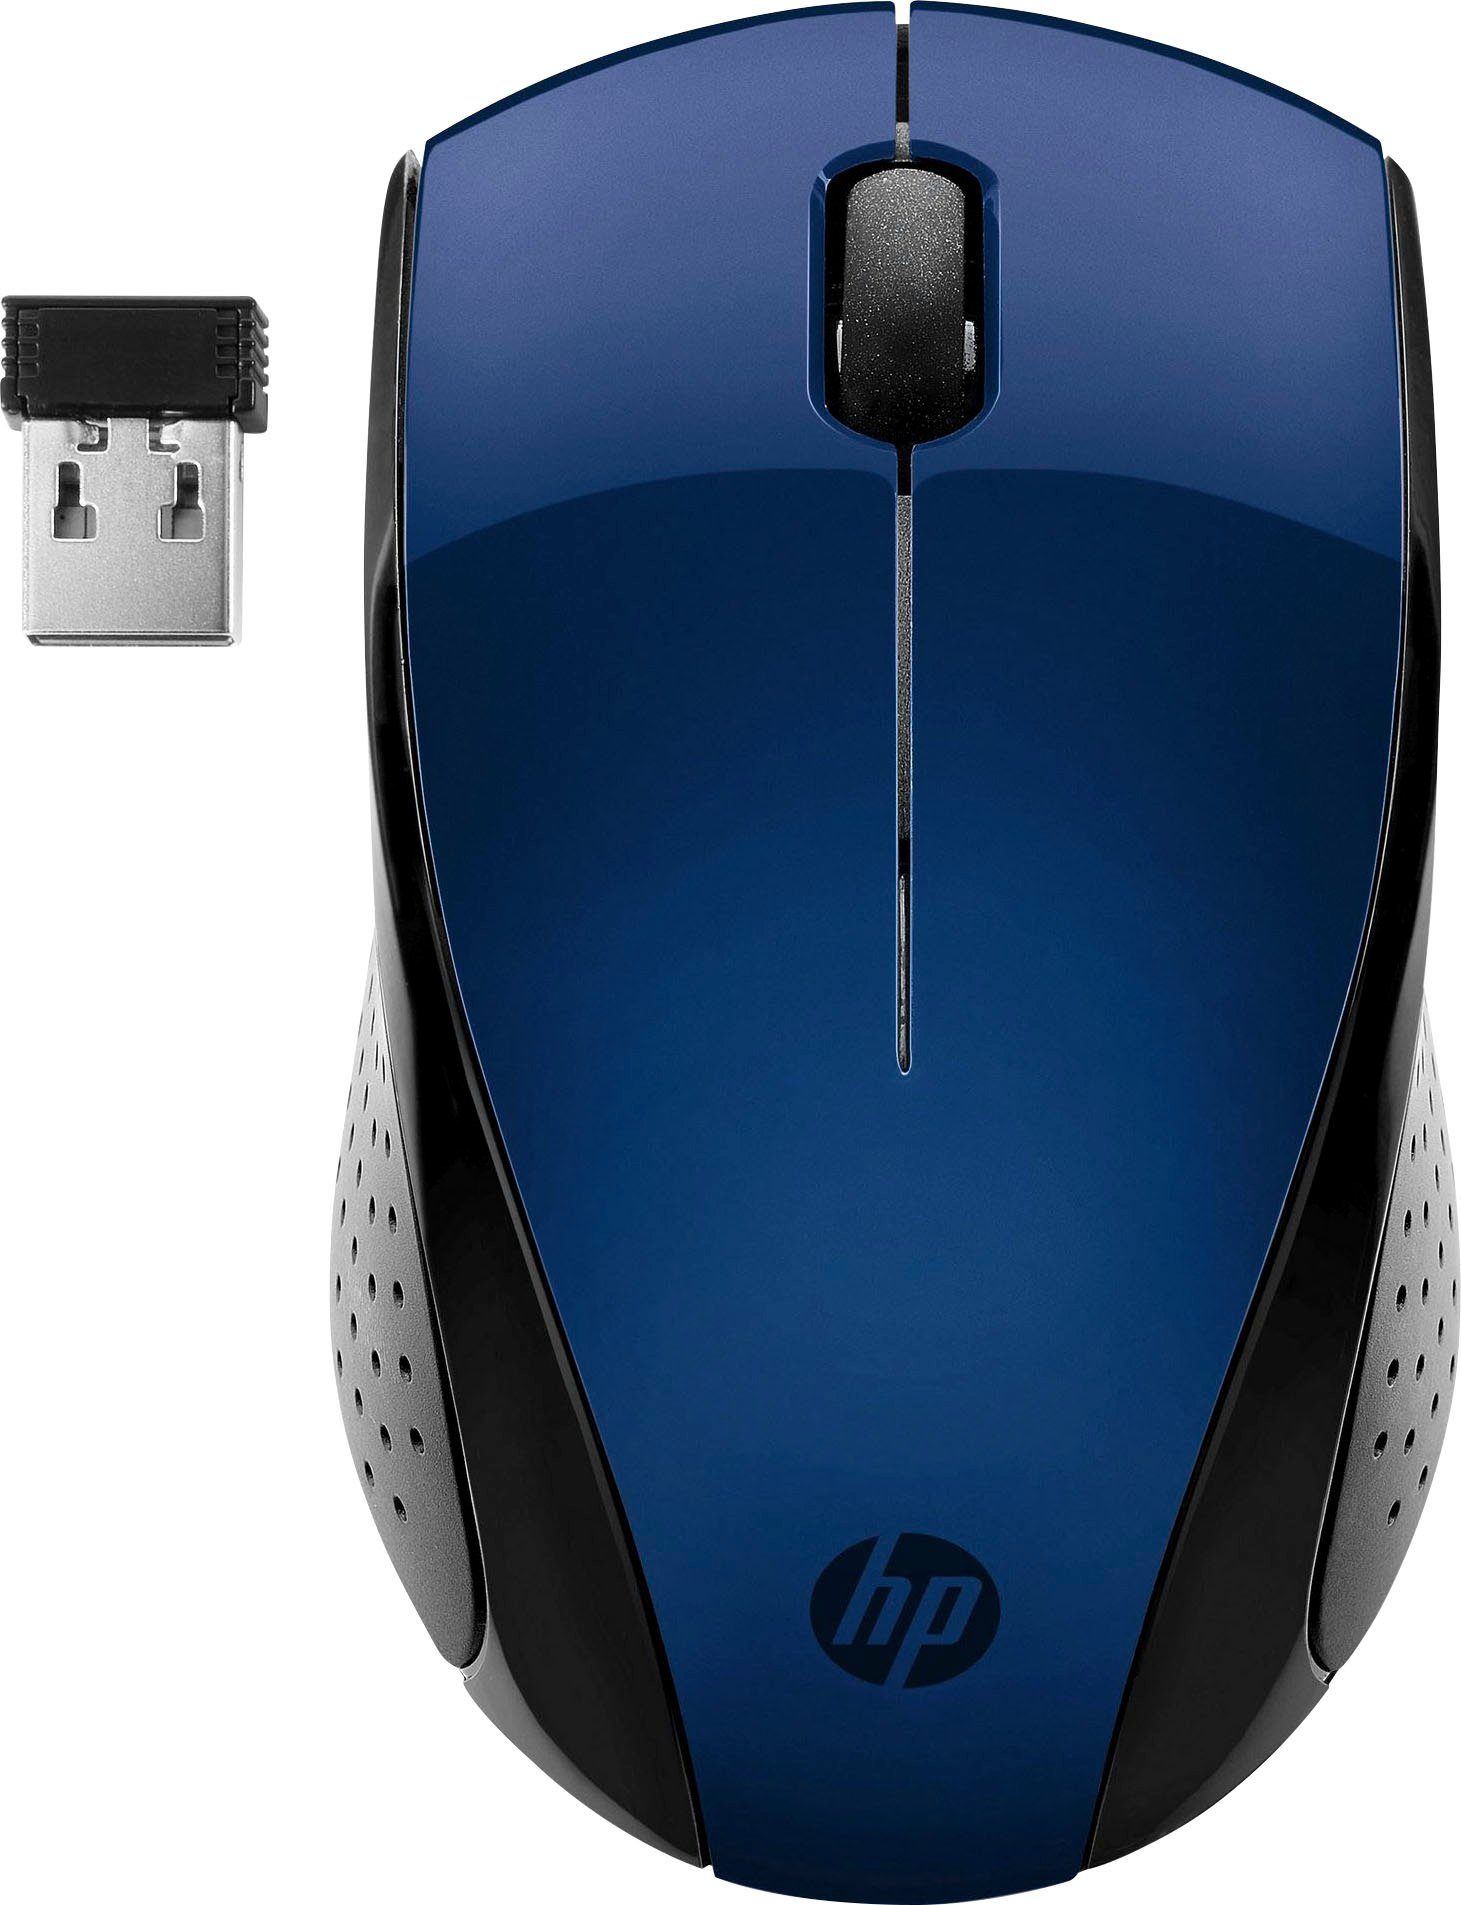 HP blau/blau 220 Mouse Wireless (Funk) Maus